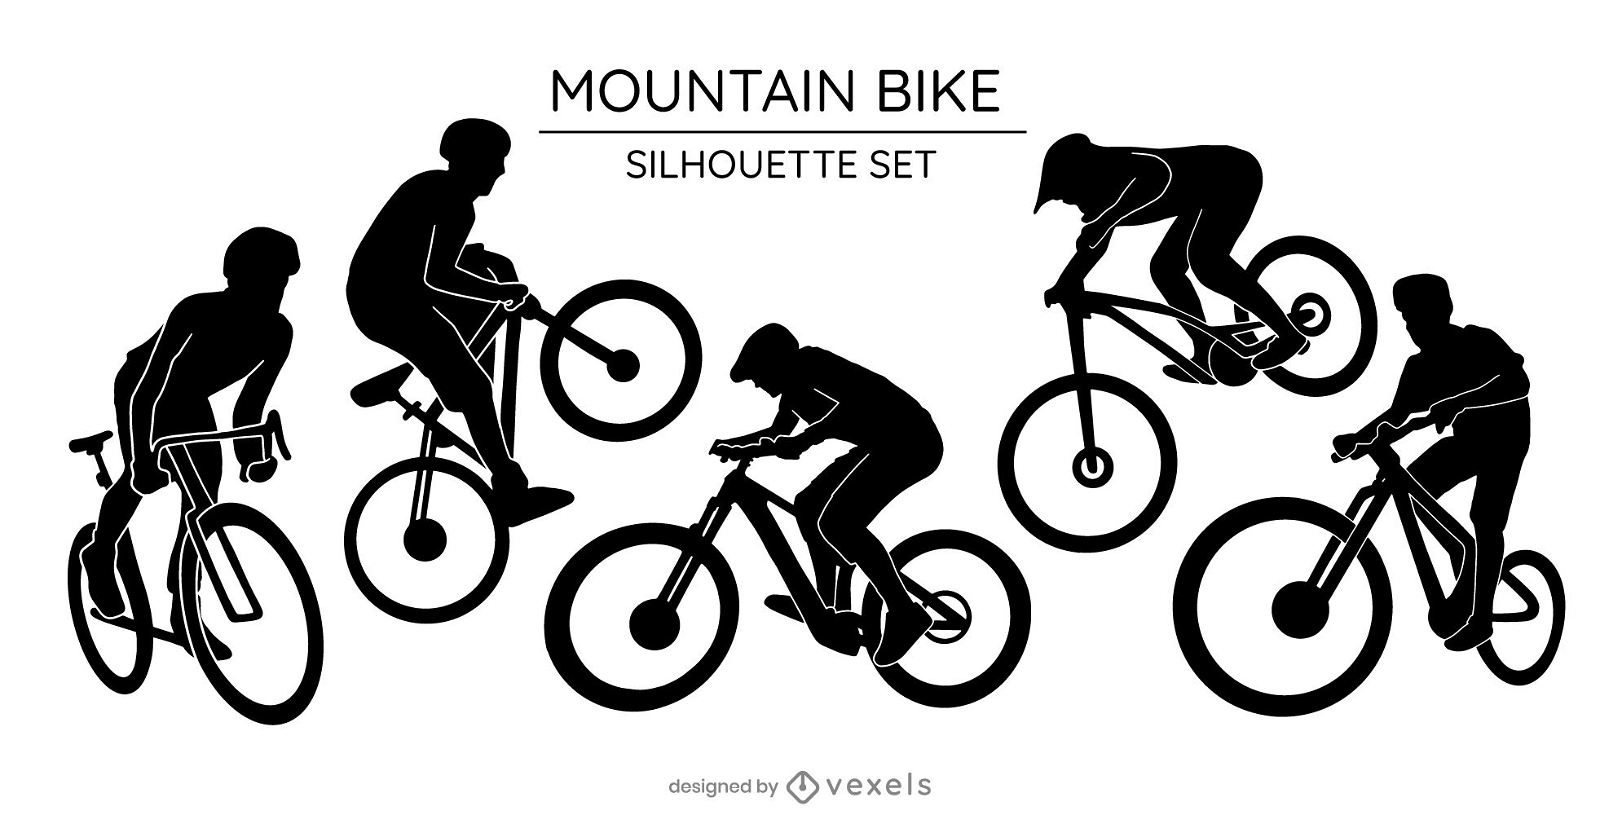 Mountain bike hobby silhouette set